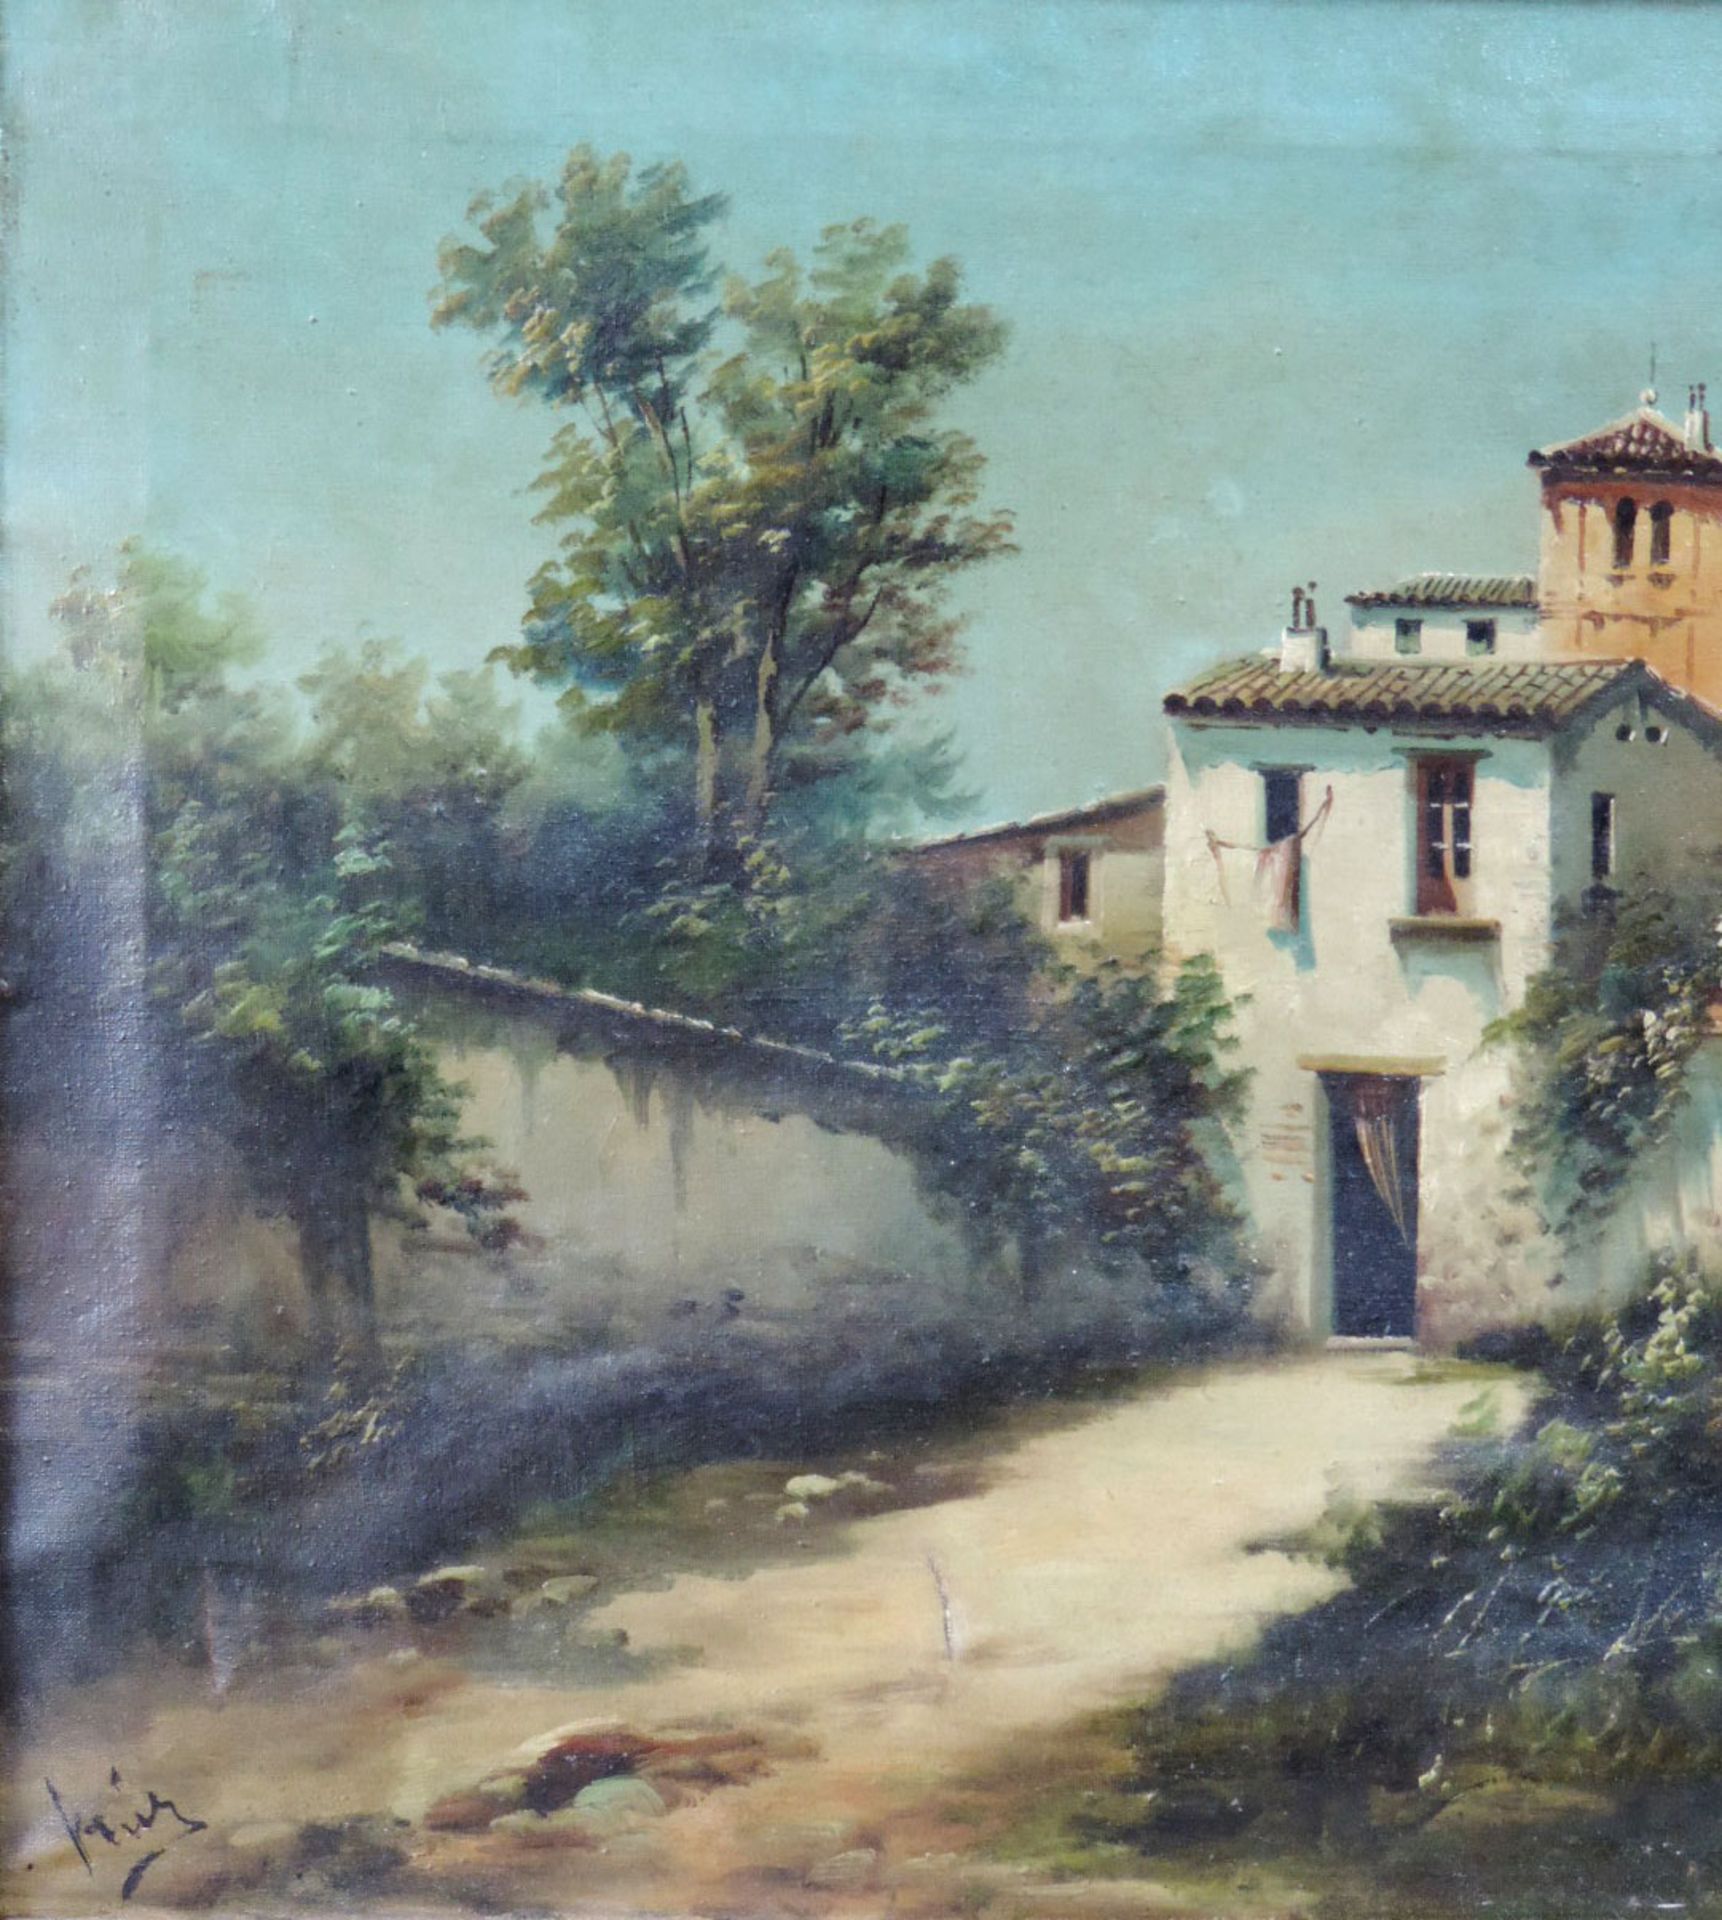 Italienische Schule (XIX). Landgut am Fluss.39 cm x 64 cm. Gemälde, Öl auf Leinwand. Beschädigt. - Image 7 of 9